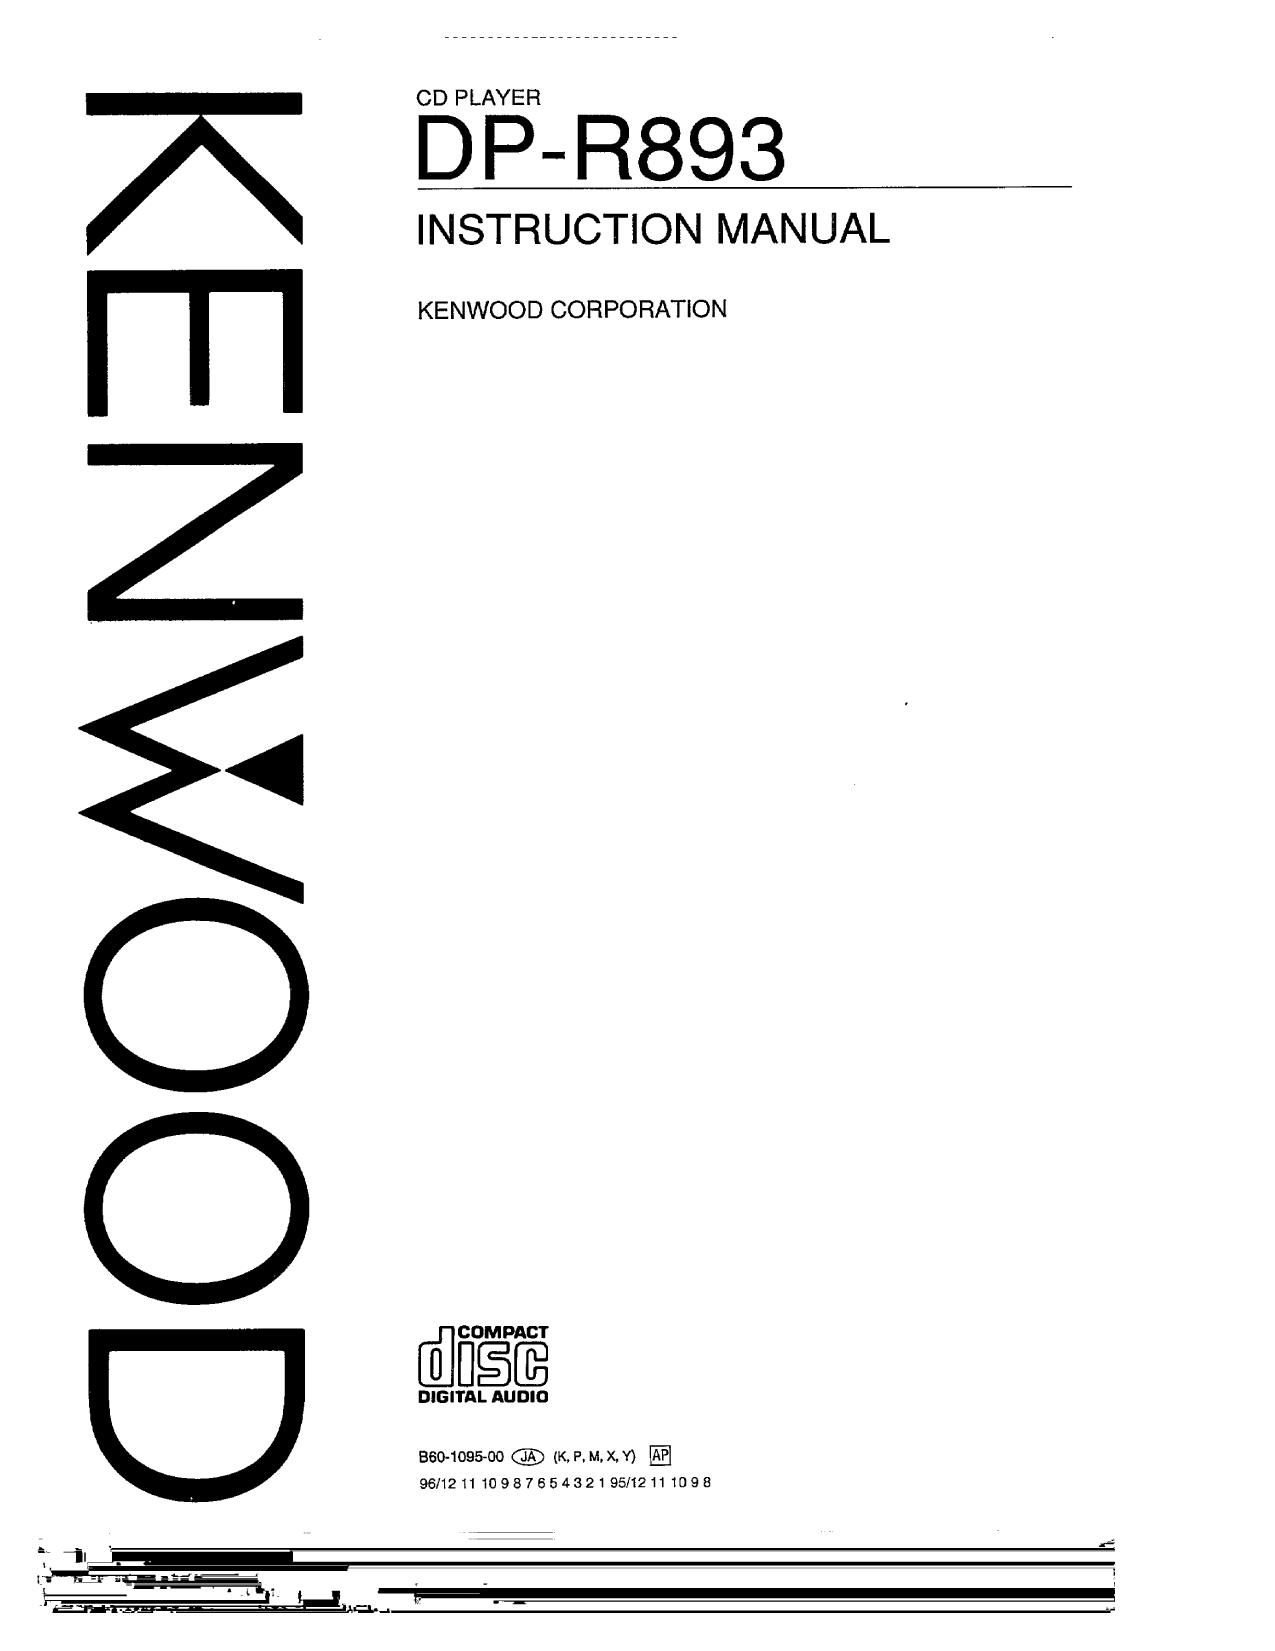 Kenwood DPR 893 Owners Manual